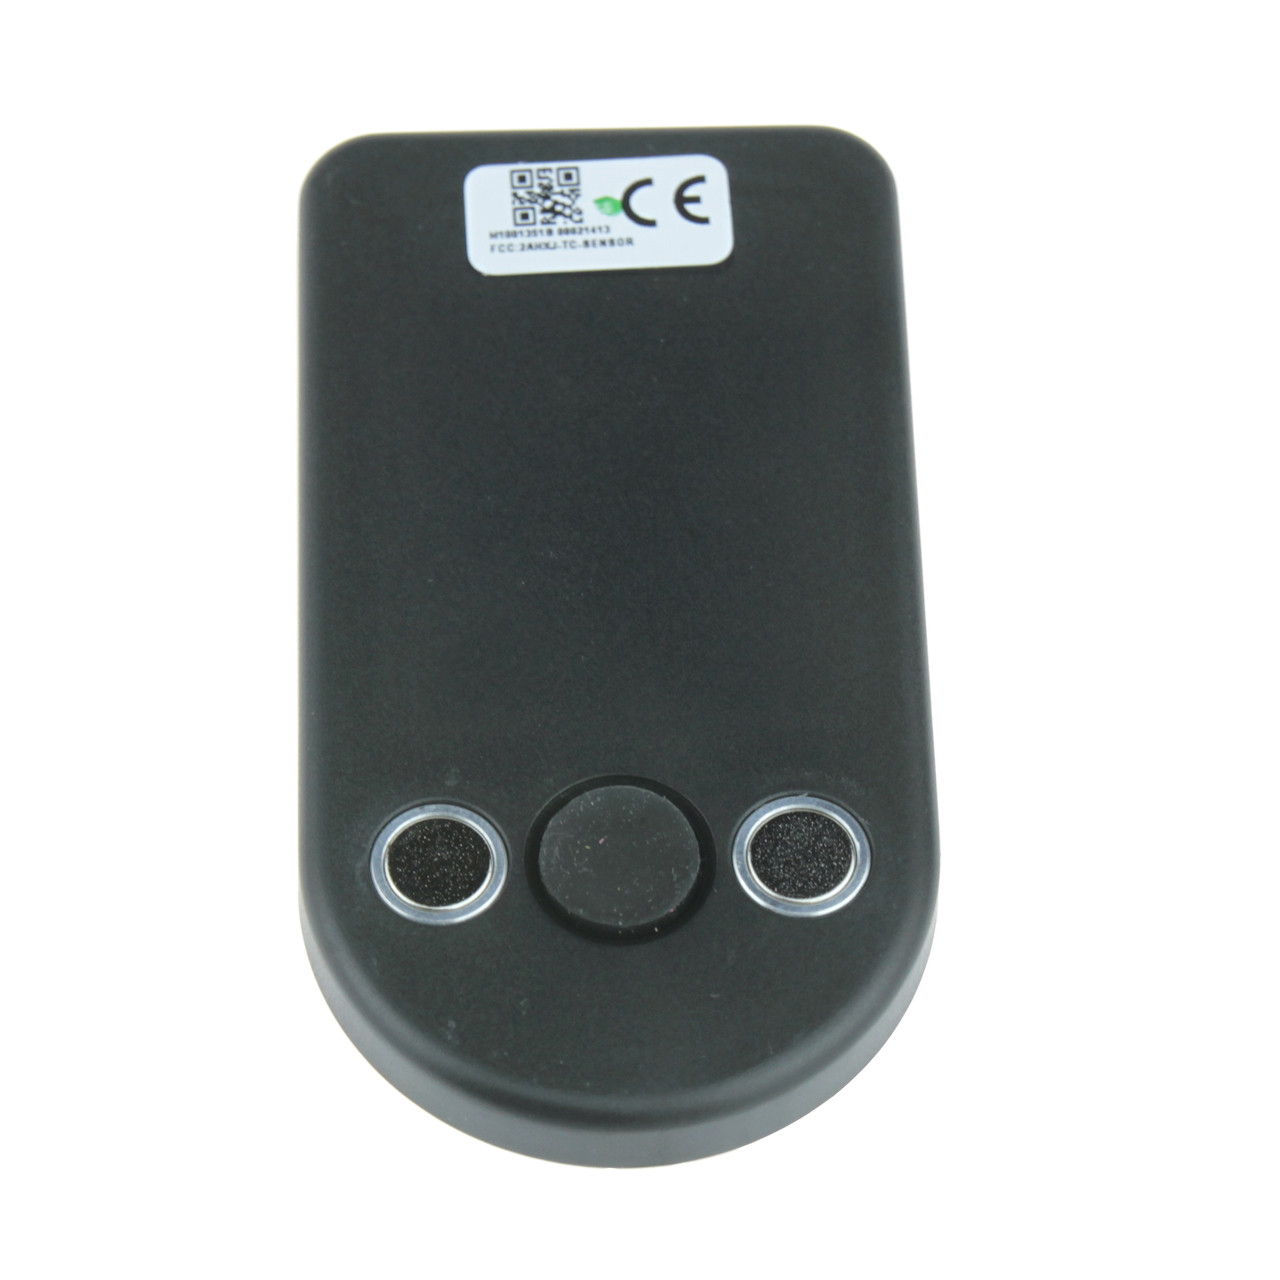 Mopeka Tank Check Remote Bluetooth Gas Bottle Level Sender - LPG Shop